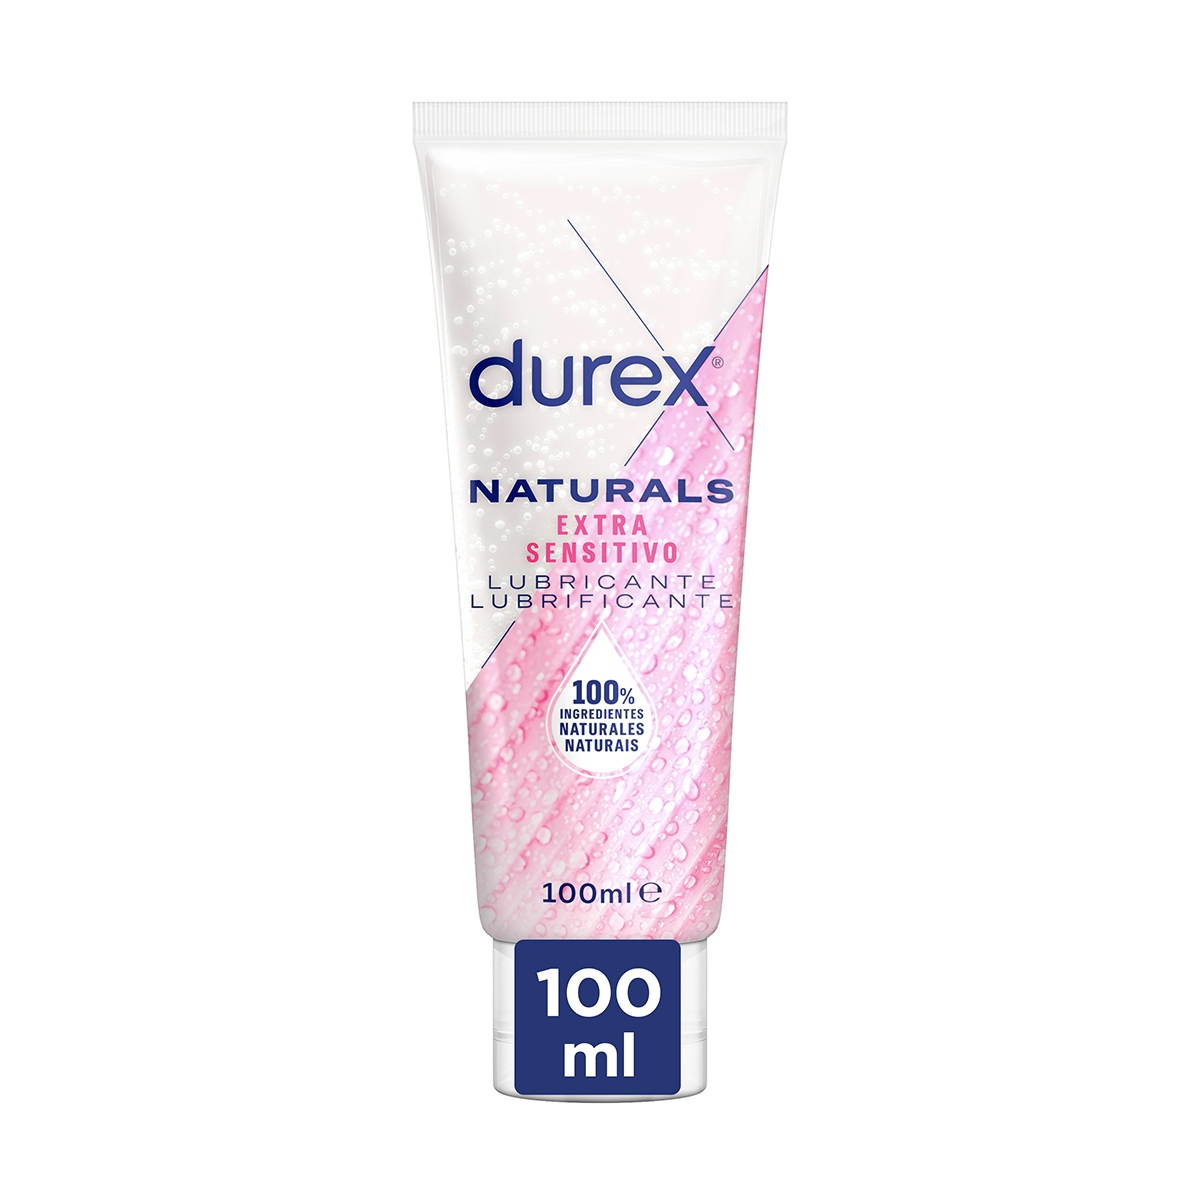 Lubricante extra sensitivo DUREX Naturals 100 ml